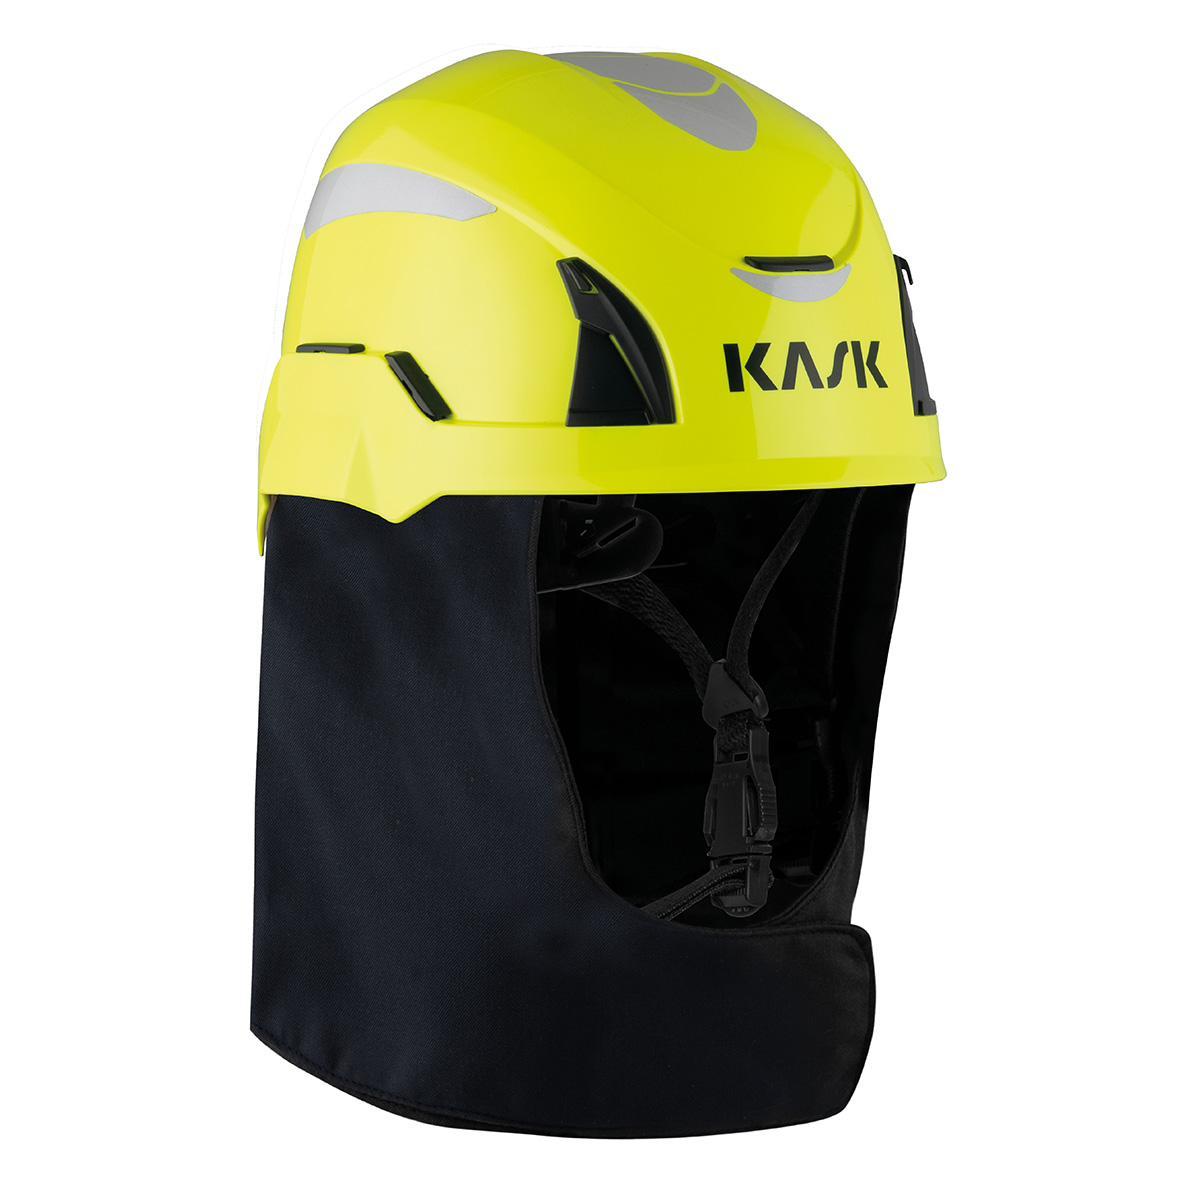 Kask - Plasma Neck Shade - Protects Neck & Ears from Harmful UV Exposure -  45 x 33 cm - [KA-WAC00020]